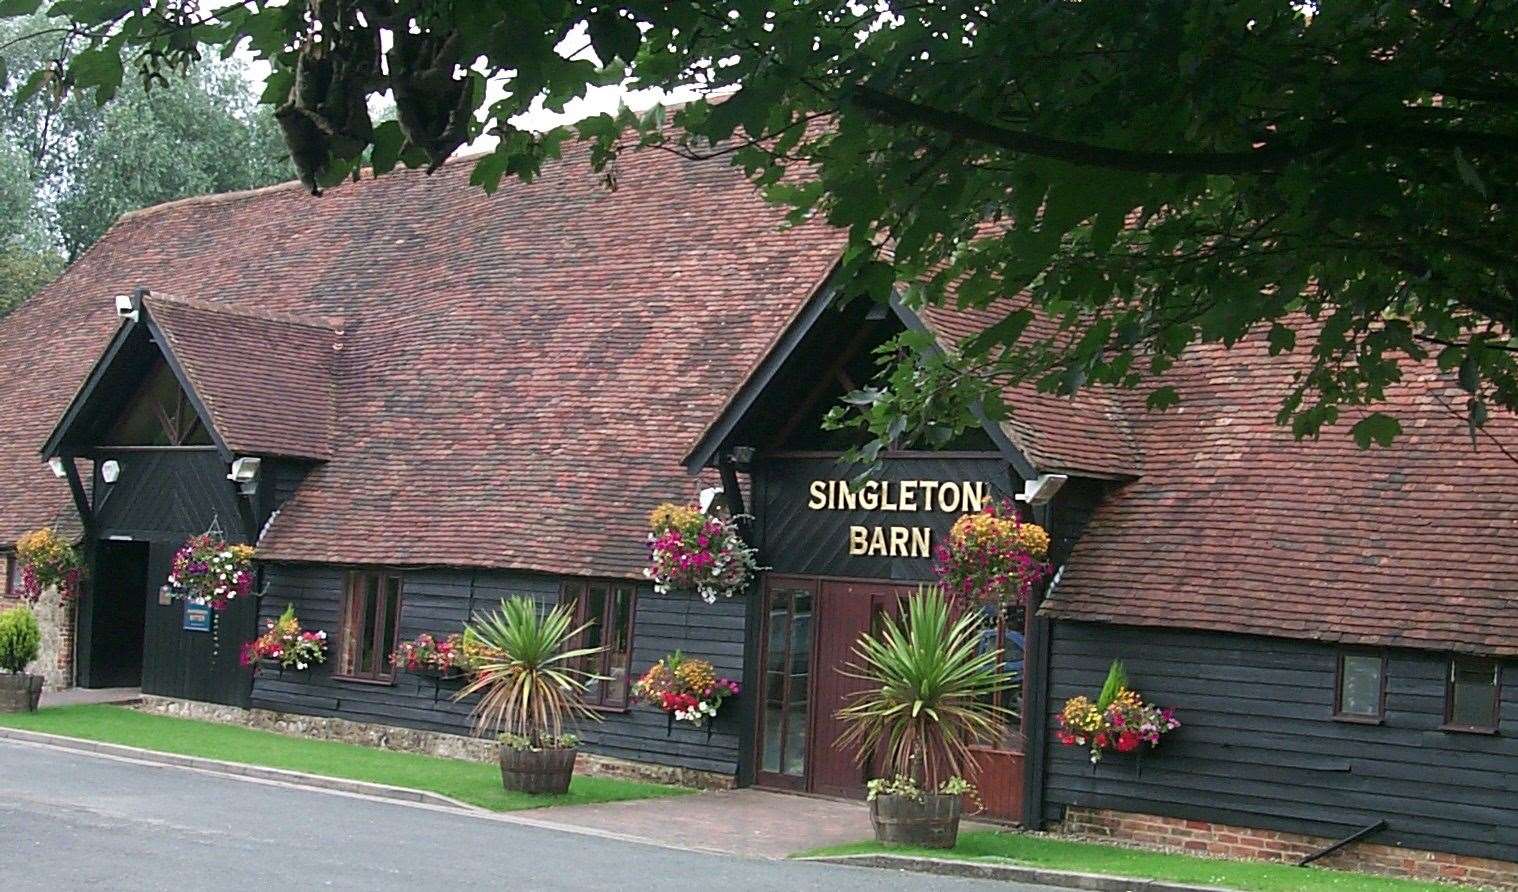 Singleton Barn pub